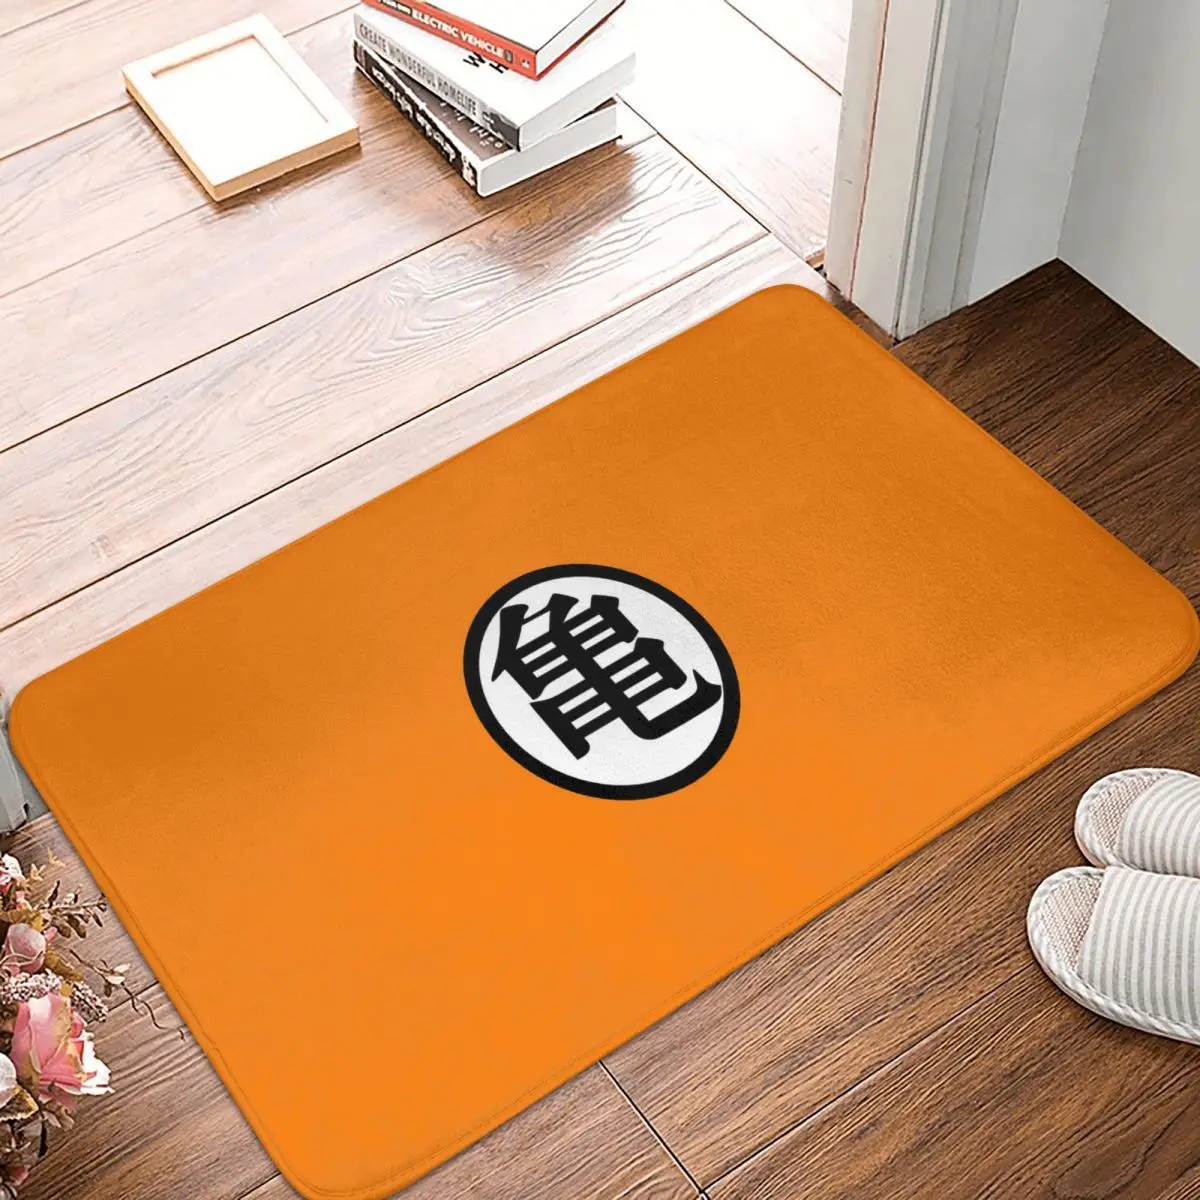 Son Goku Doormat Bathroom Welcome Soft Kitchen Home Carpet Japan Anime Cartoon Anti-slip Floor Rug Area Rugs